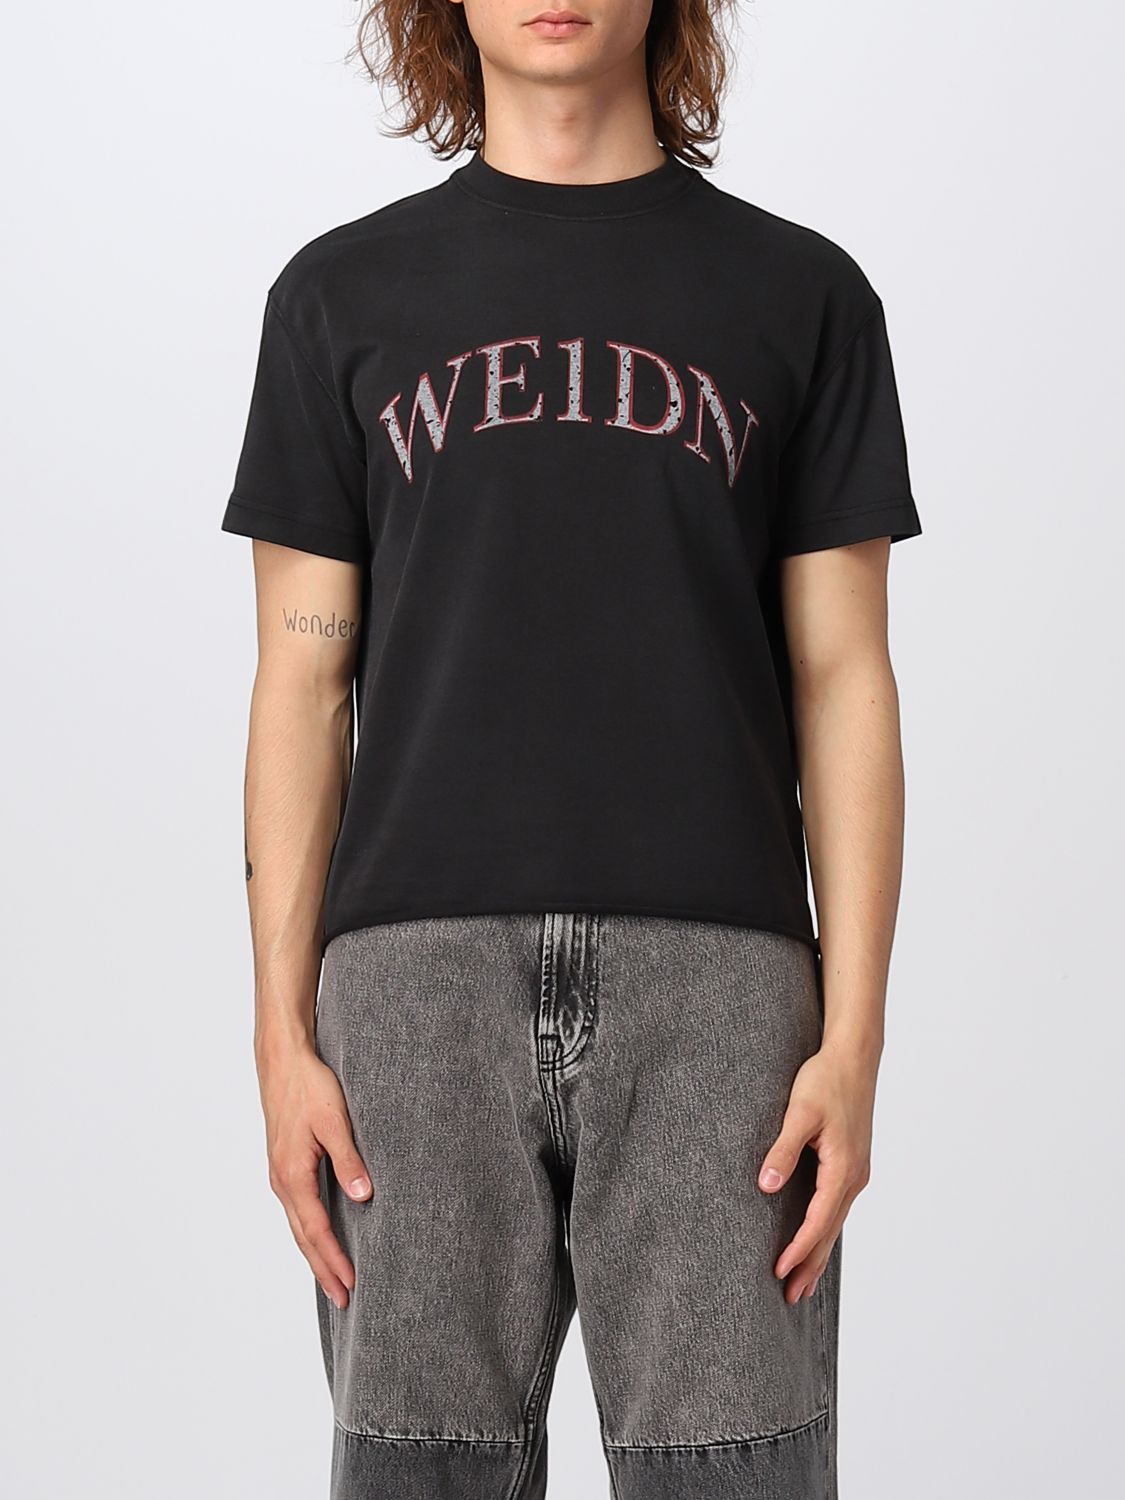 WE11DONE: t-shirt for man - Black | We11Done t-shirt WDTT123844U online ...